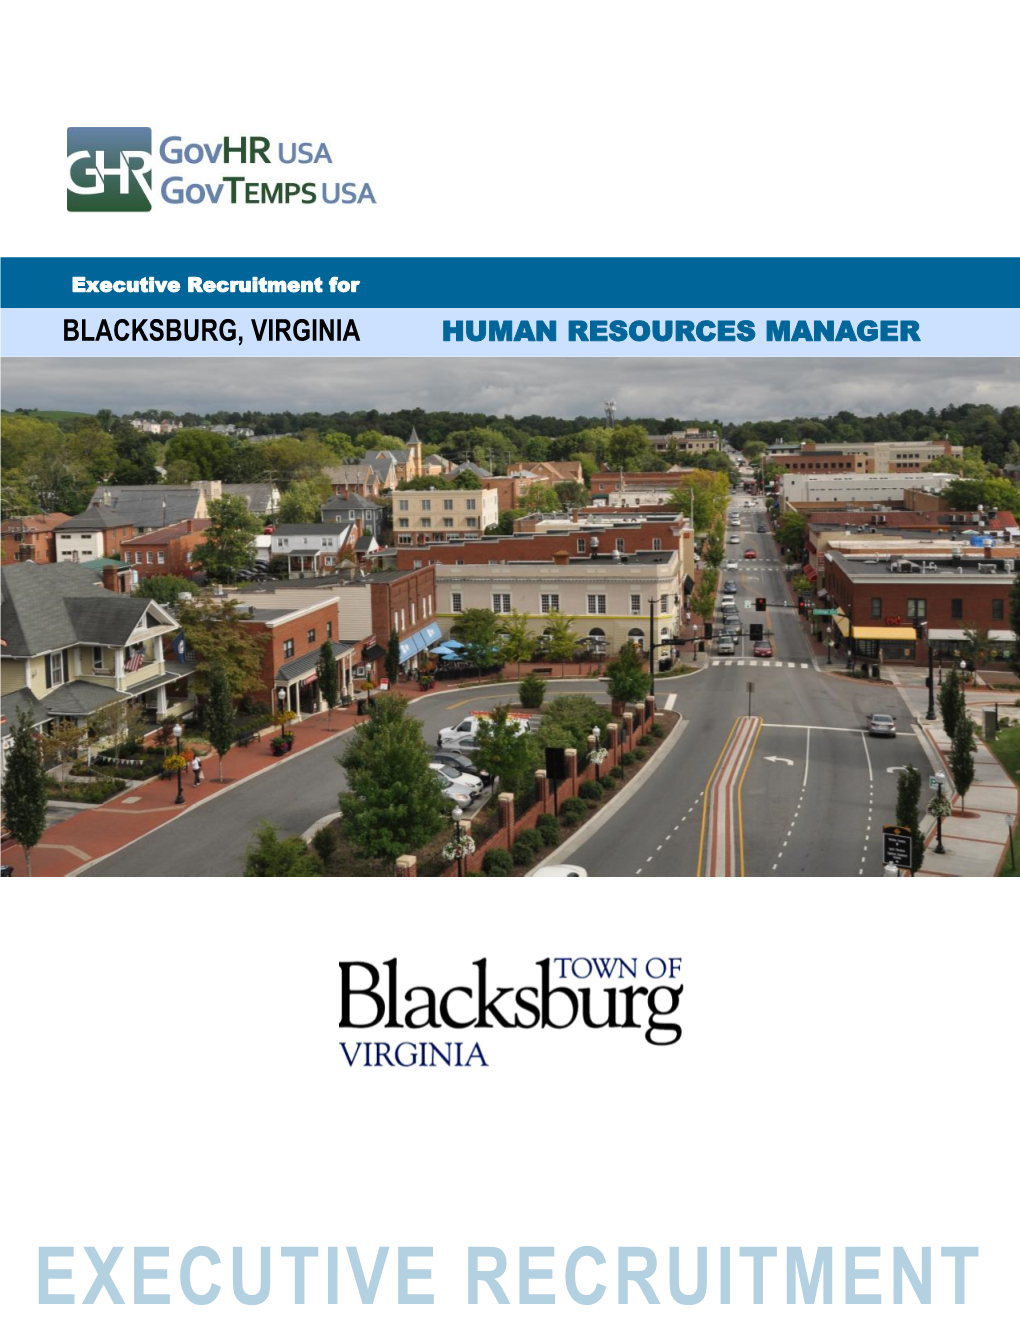 Blacksburg, Virginia Human Resources Manager